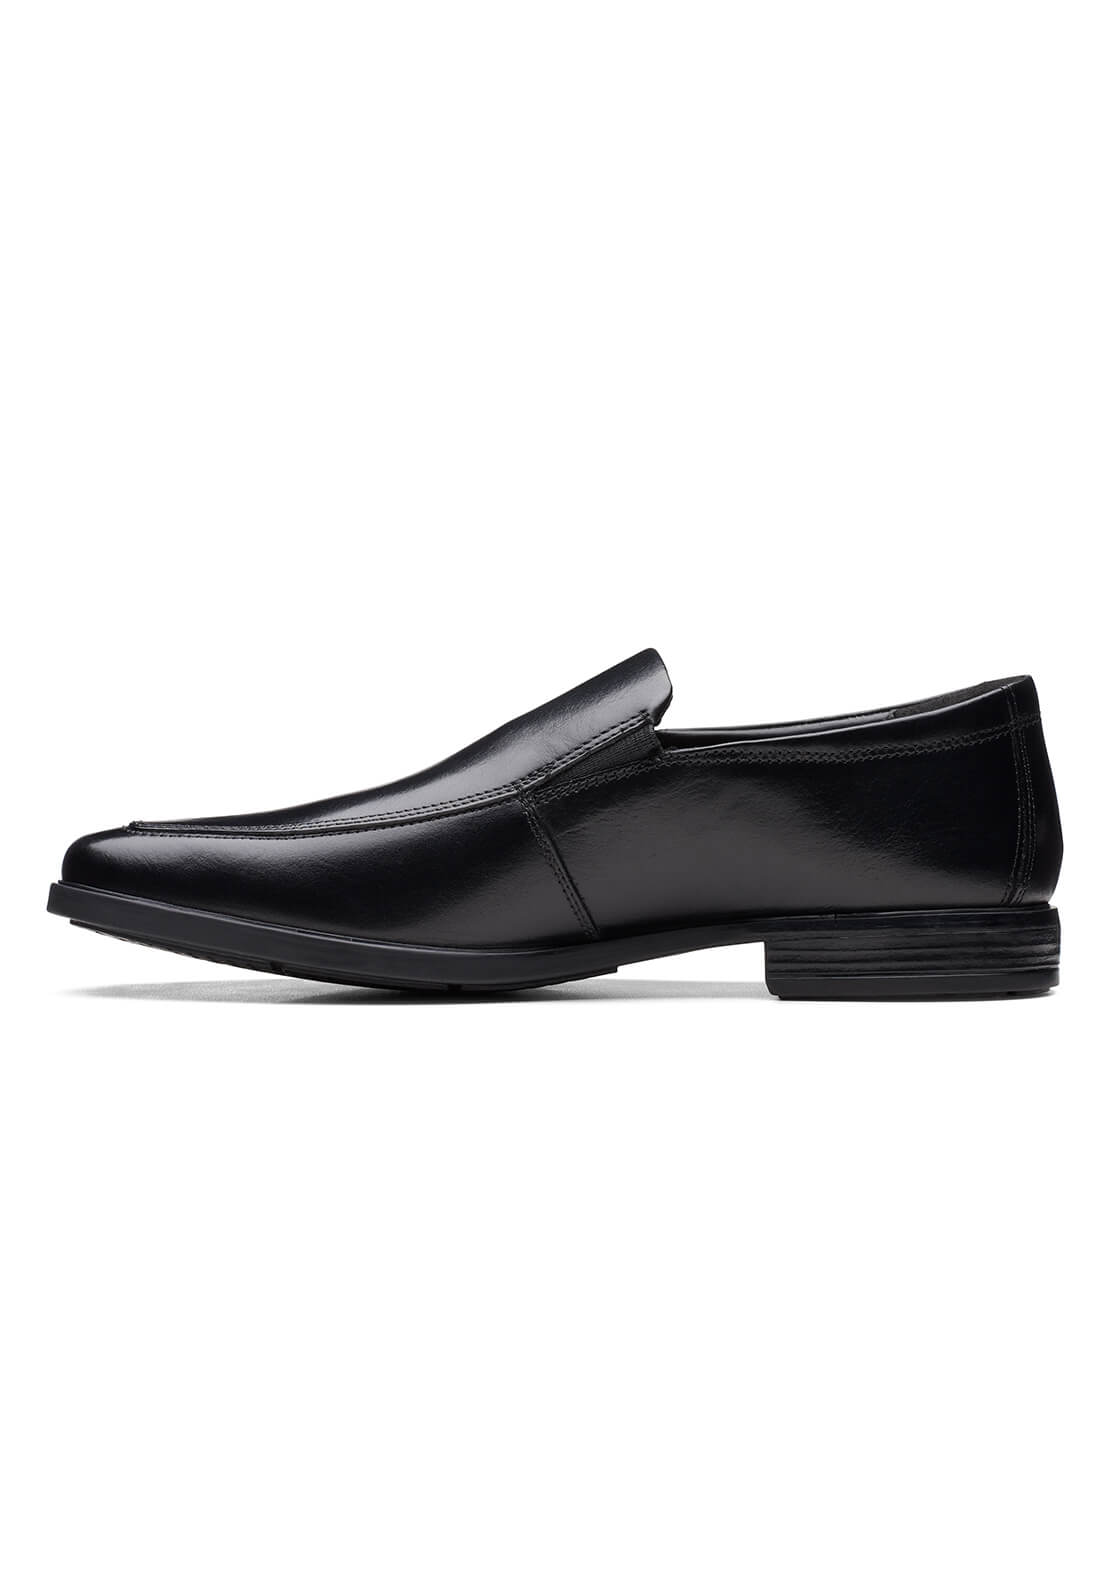 Clarks Howard Edge Formal Shoe - Black 3 Shaws Department Stores